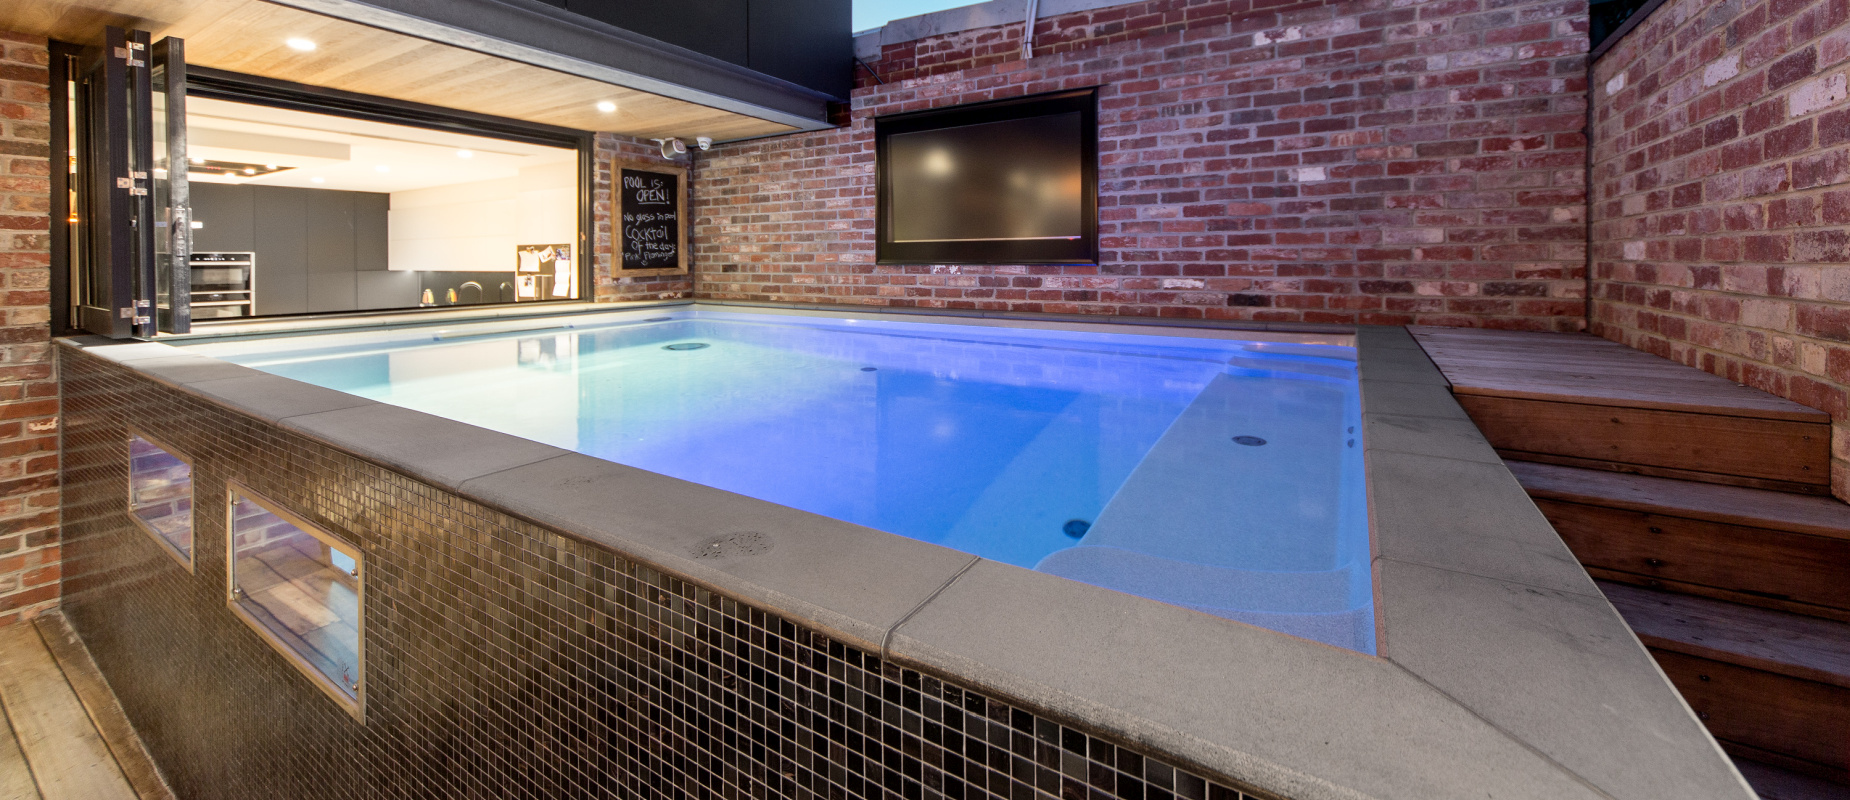 Plunge and Courtyard Self-standing fibreglass pool design idea